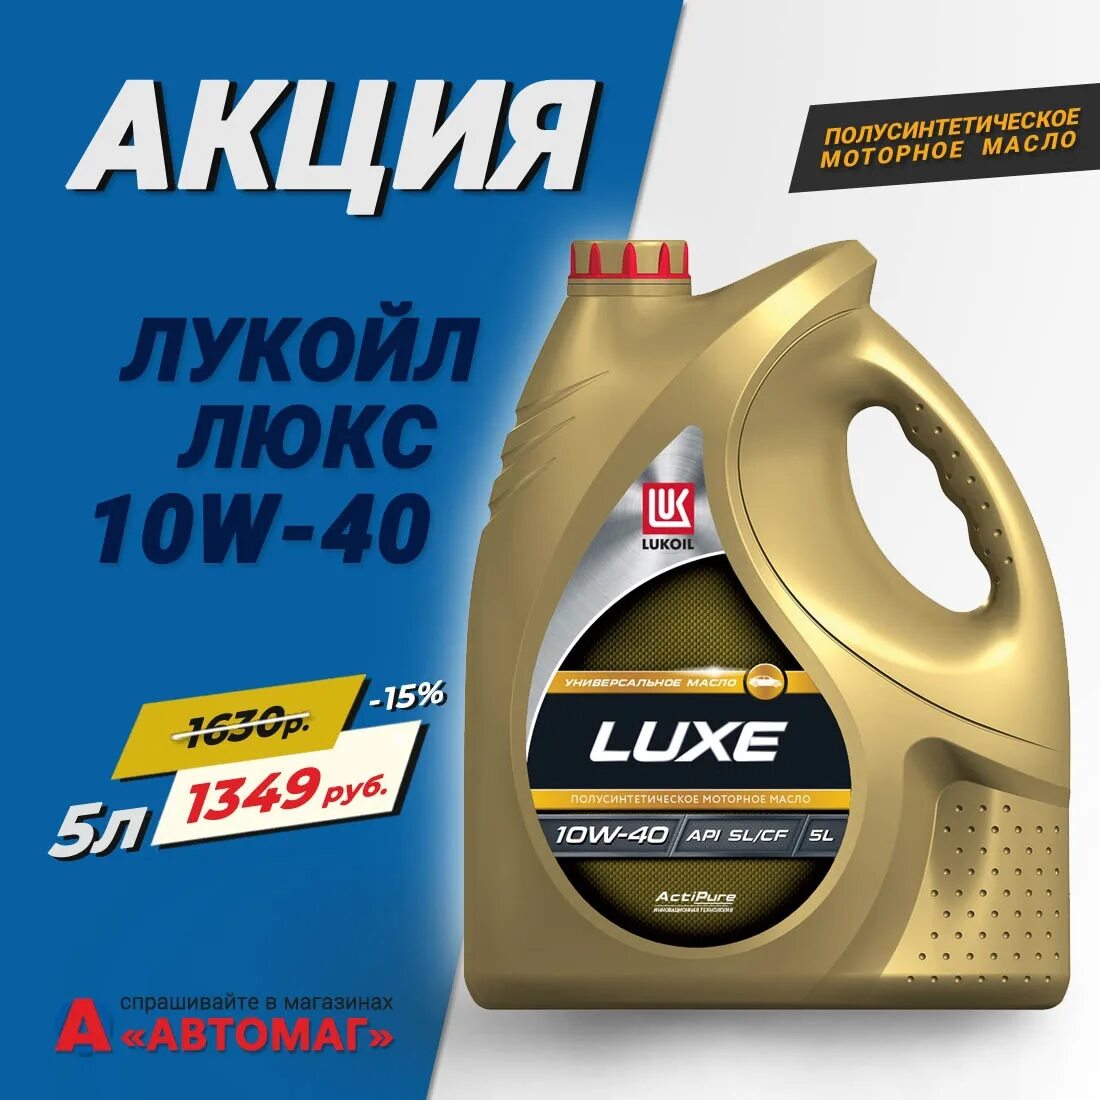 Lukoil Luxe 10w-40. Лукойл 10 40 API-SL. Лукойл Люкс 10 w40 ЫД са. Лукойл Люкс 5 40 SL/CF. Масло люкс 10w40